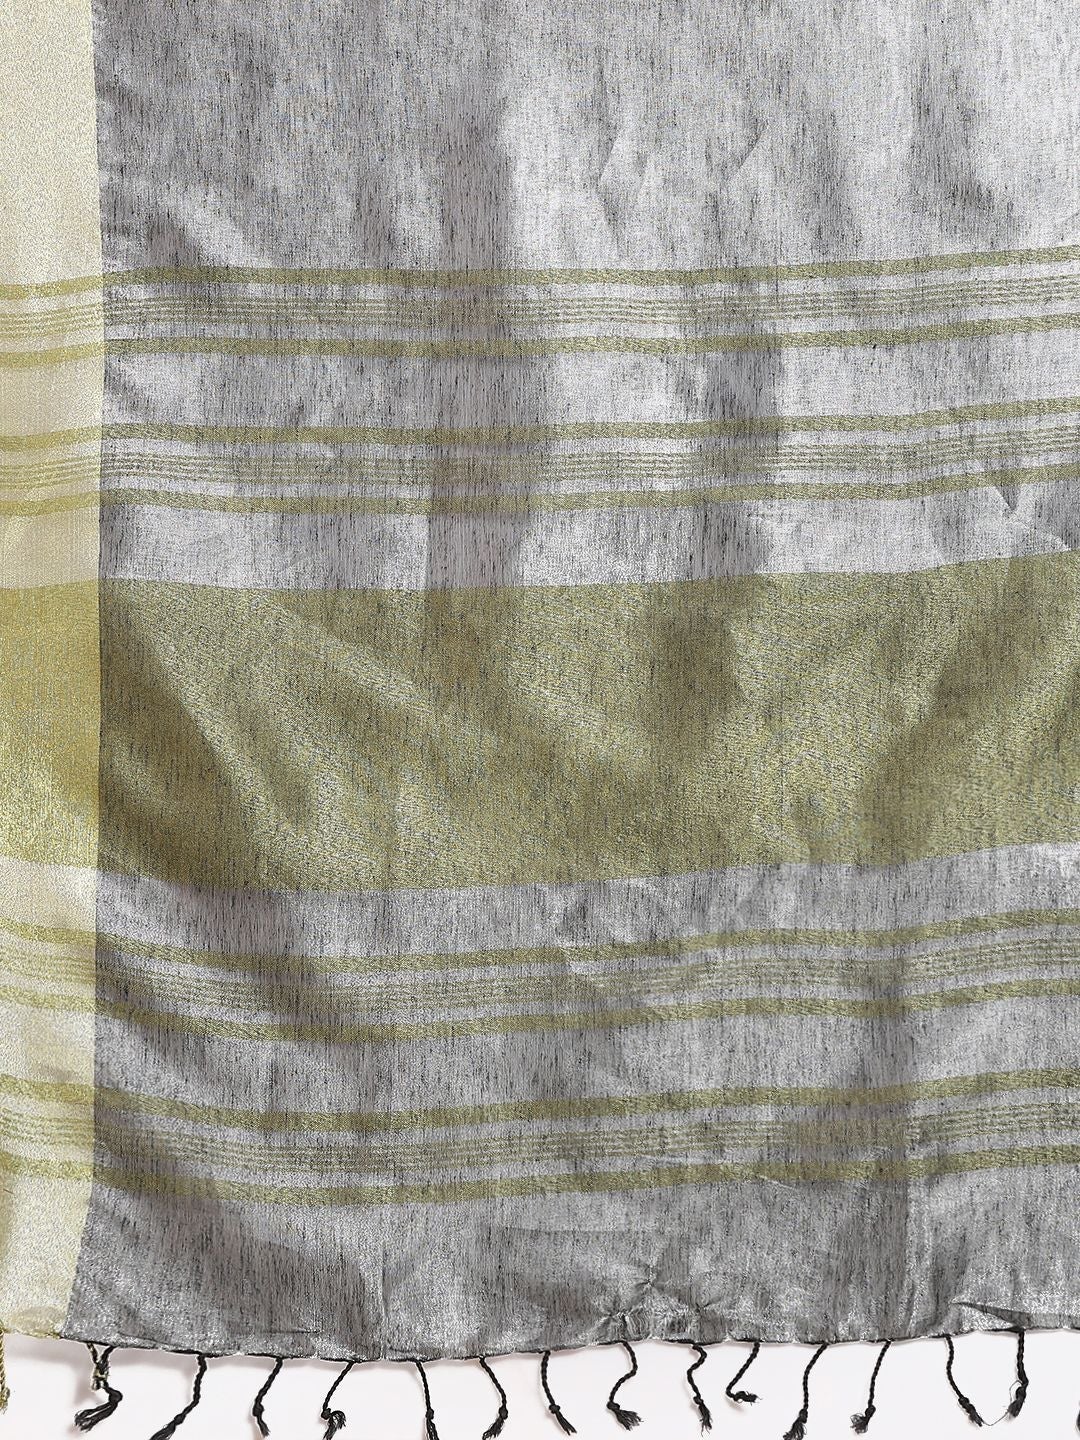 Women's Organic Uppadda Tissue Linen Handloom Saree - Olive Mist